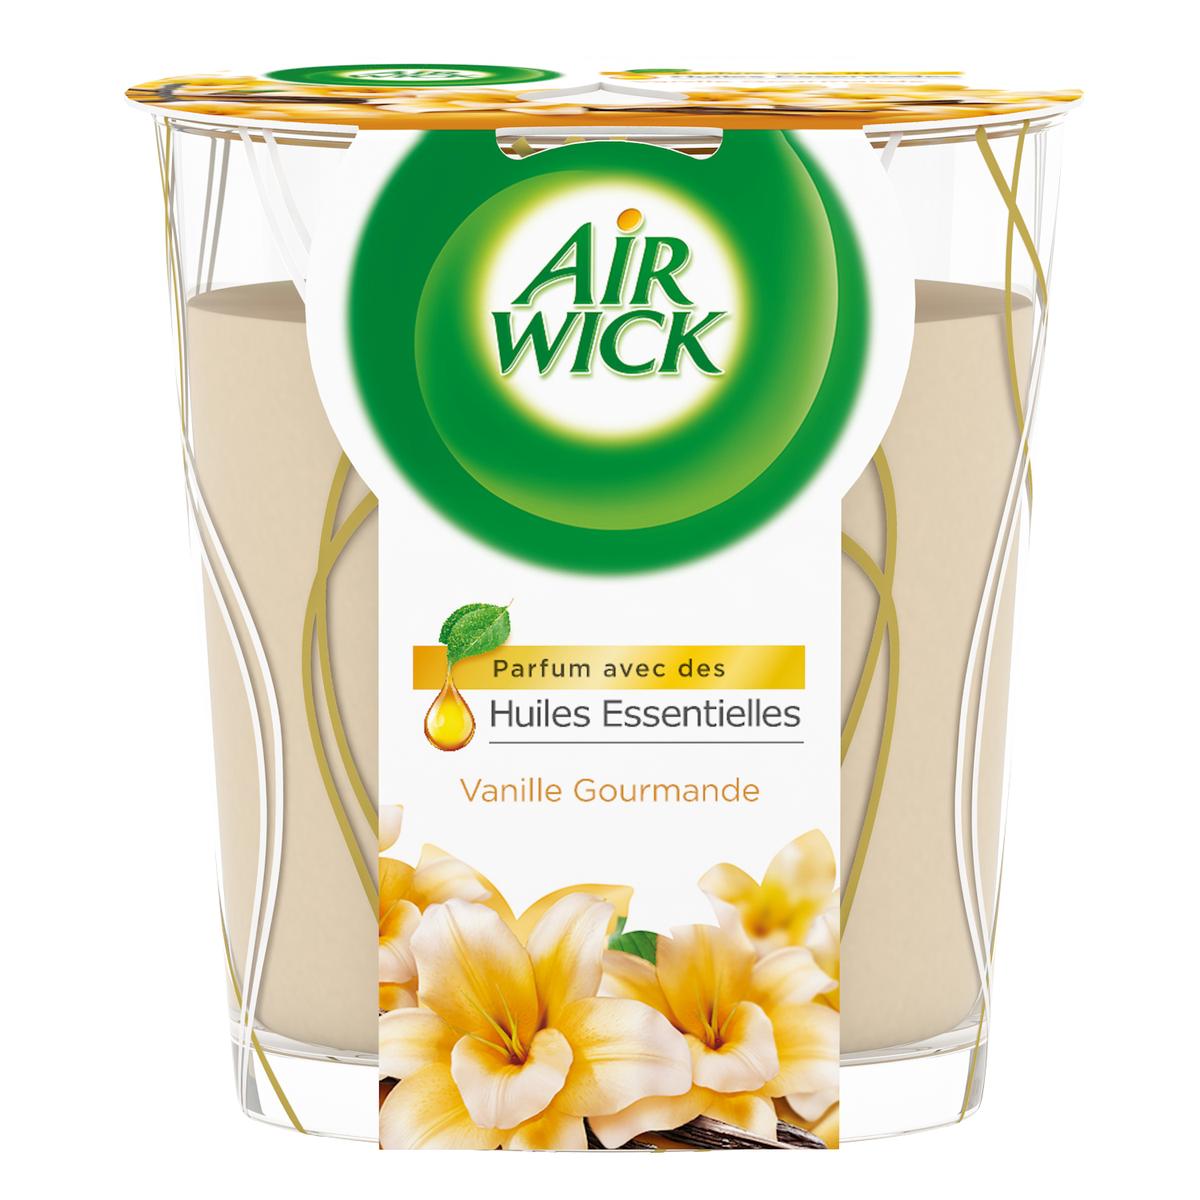 Achat / Vente Air Wick Désodorisant mèche senteur eau fraiche, 375ml